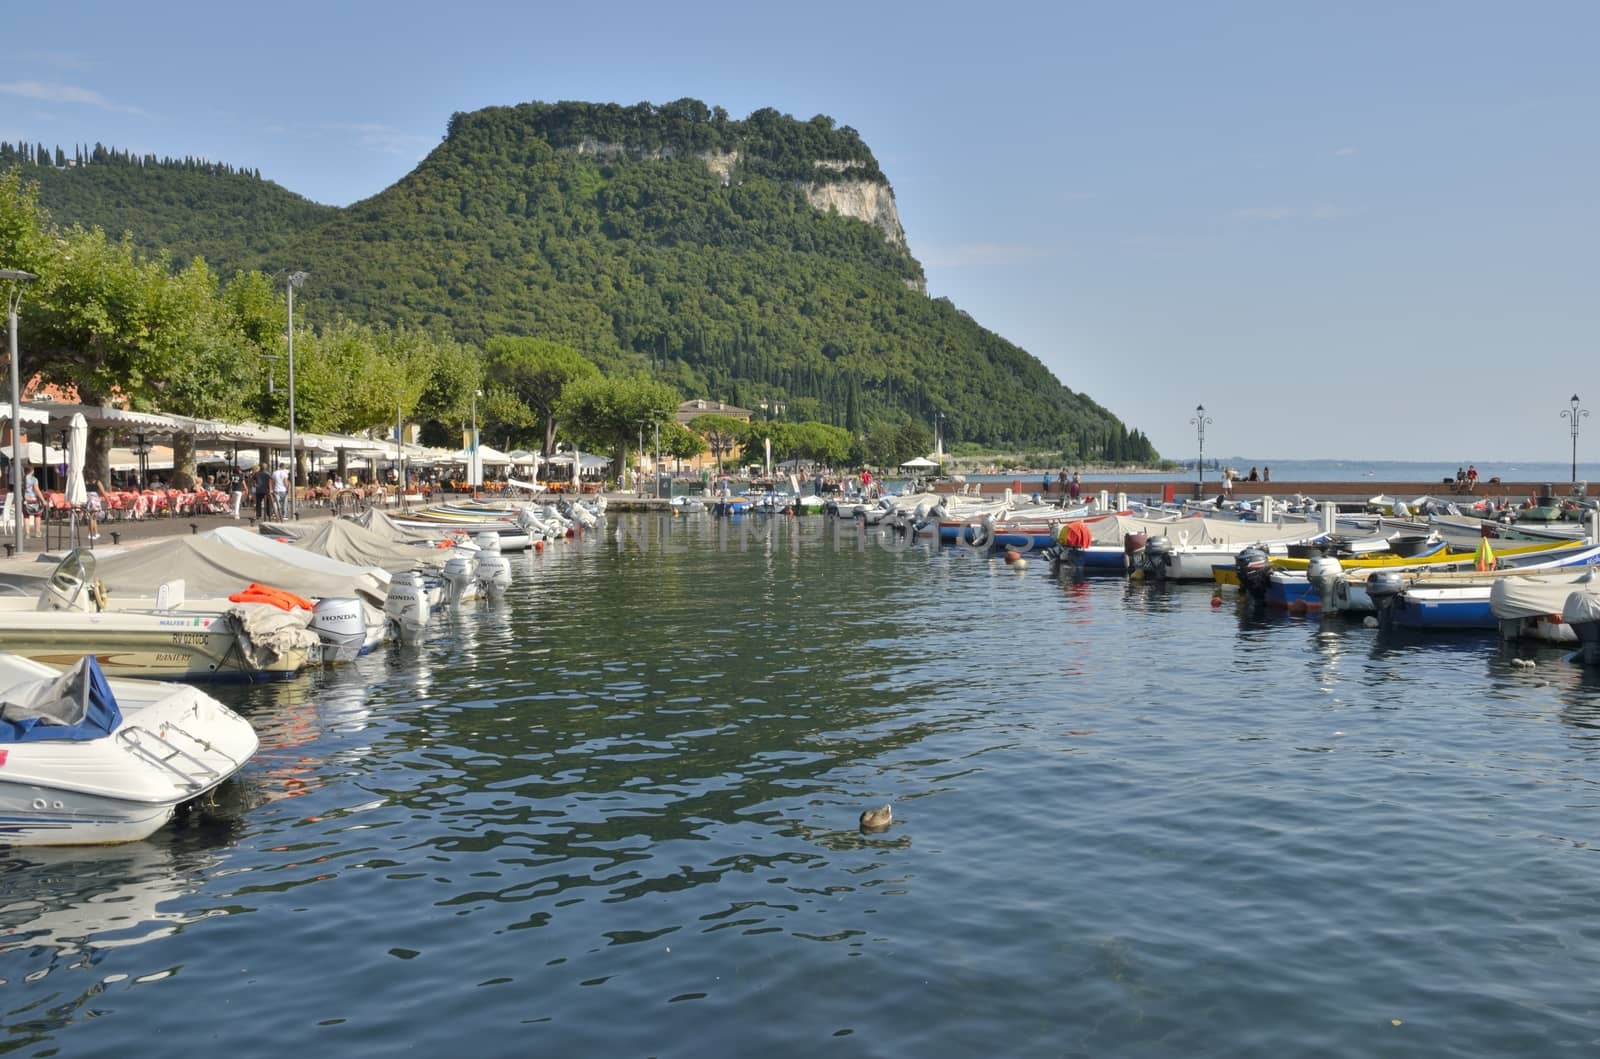 Garda is a comune on the shore of Lake Garda, in the province of Verona, region of Veneto, Northeastern Italy.